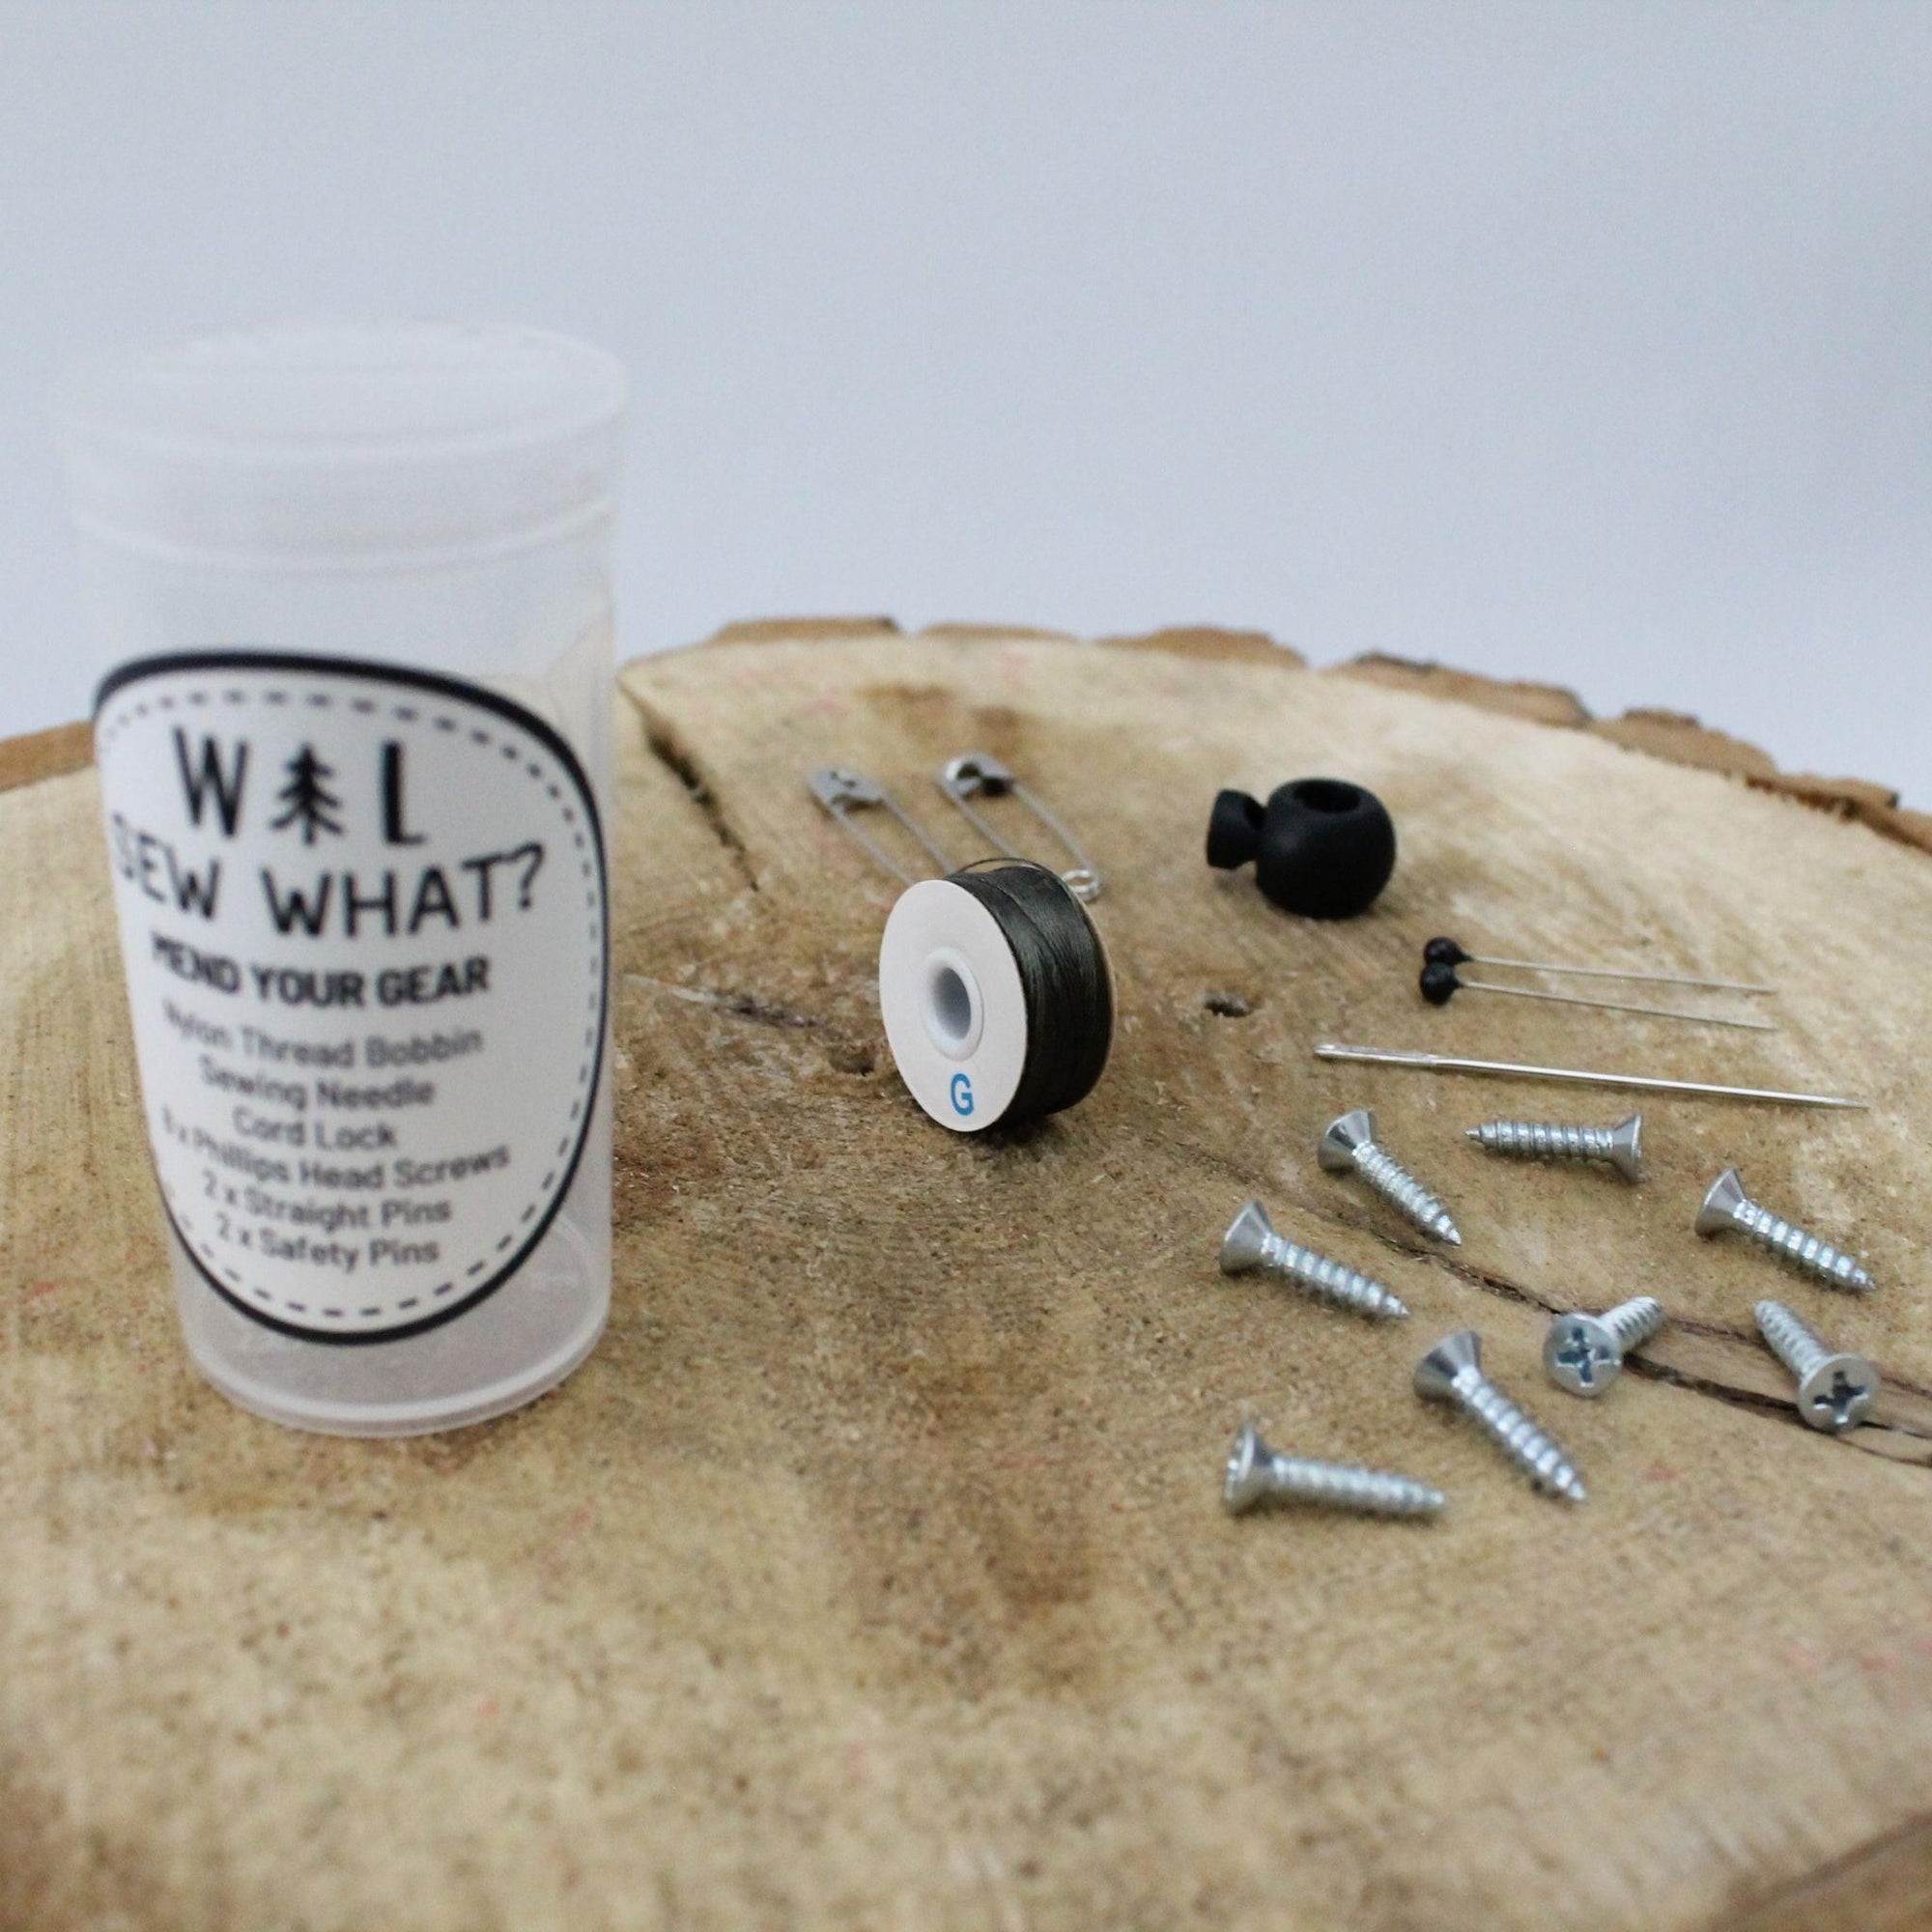 Sew What? Repair Kit - Wild | Life Outdoor Adventures